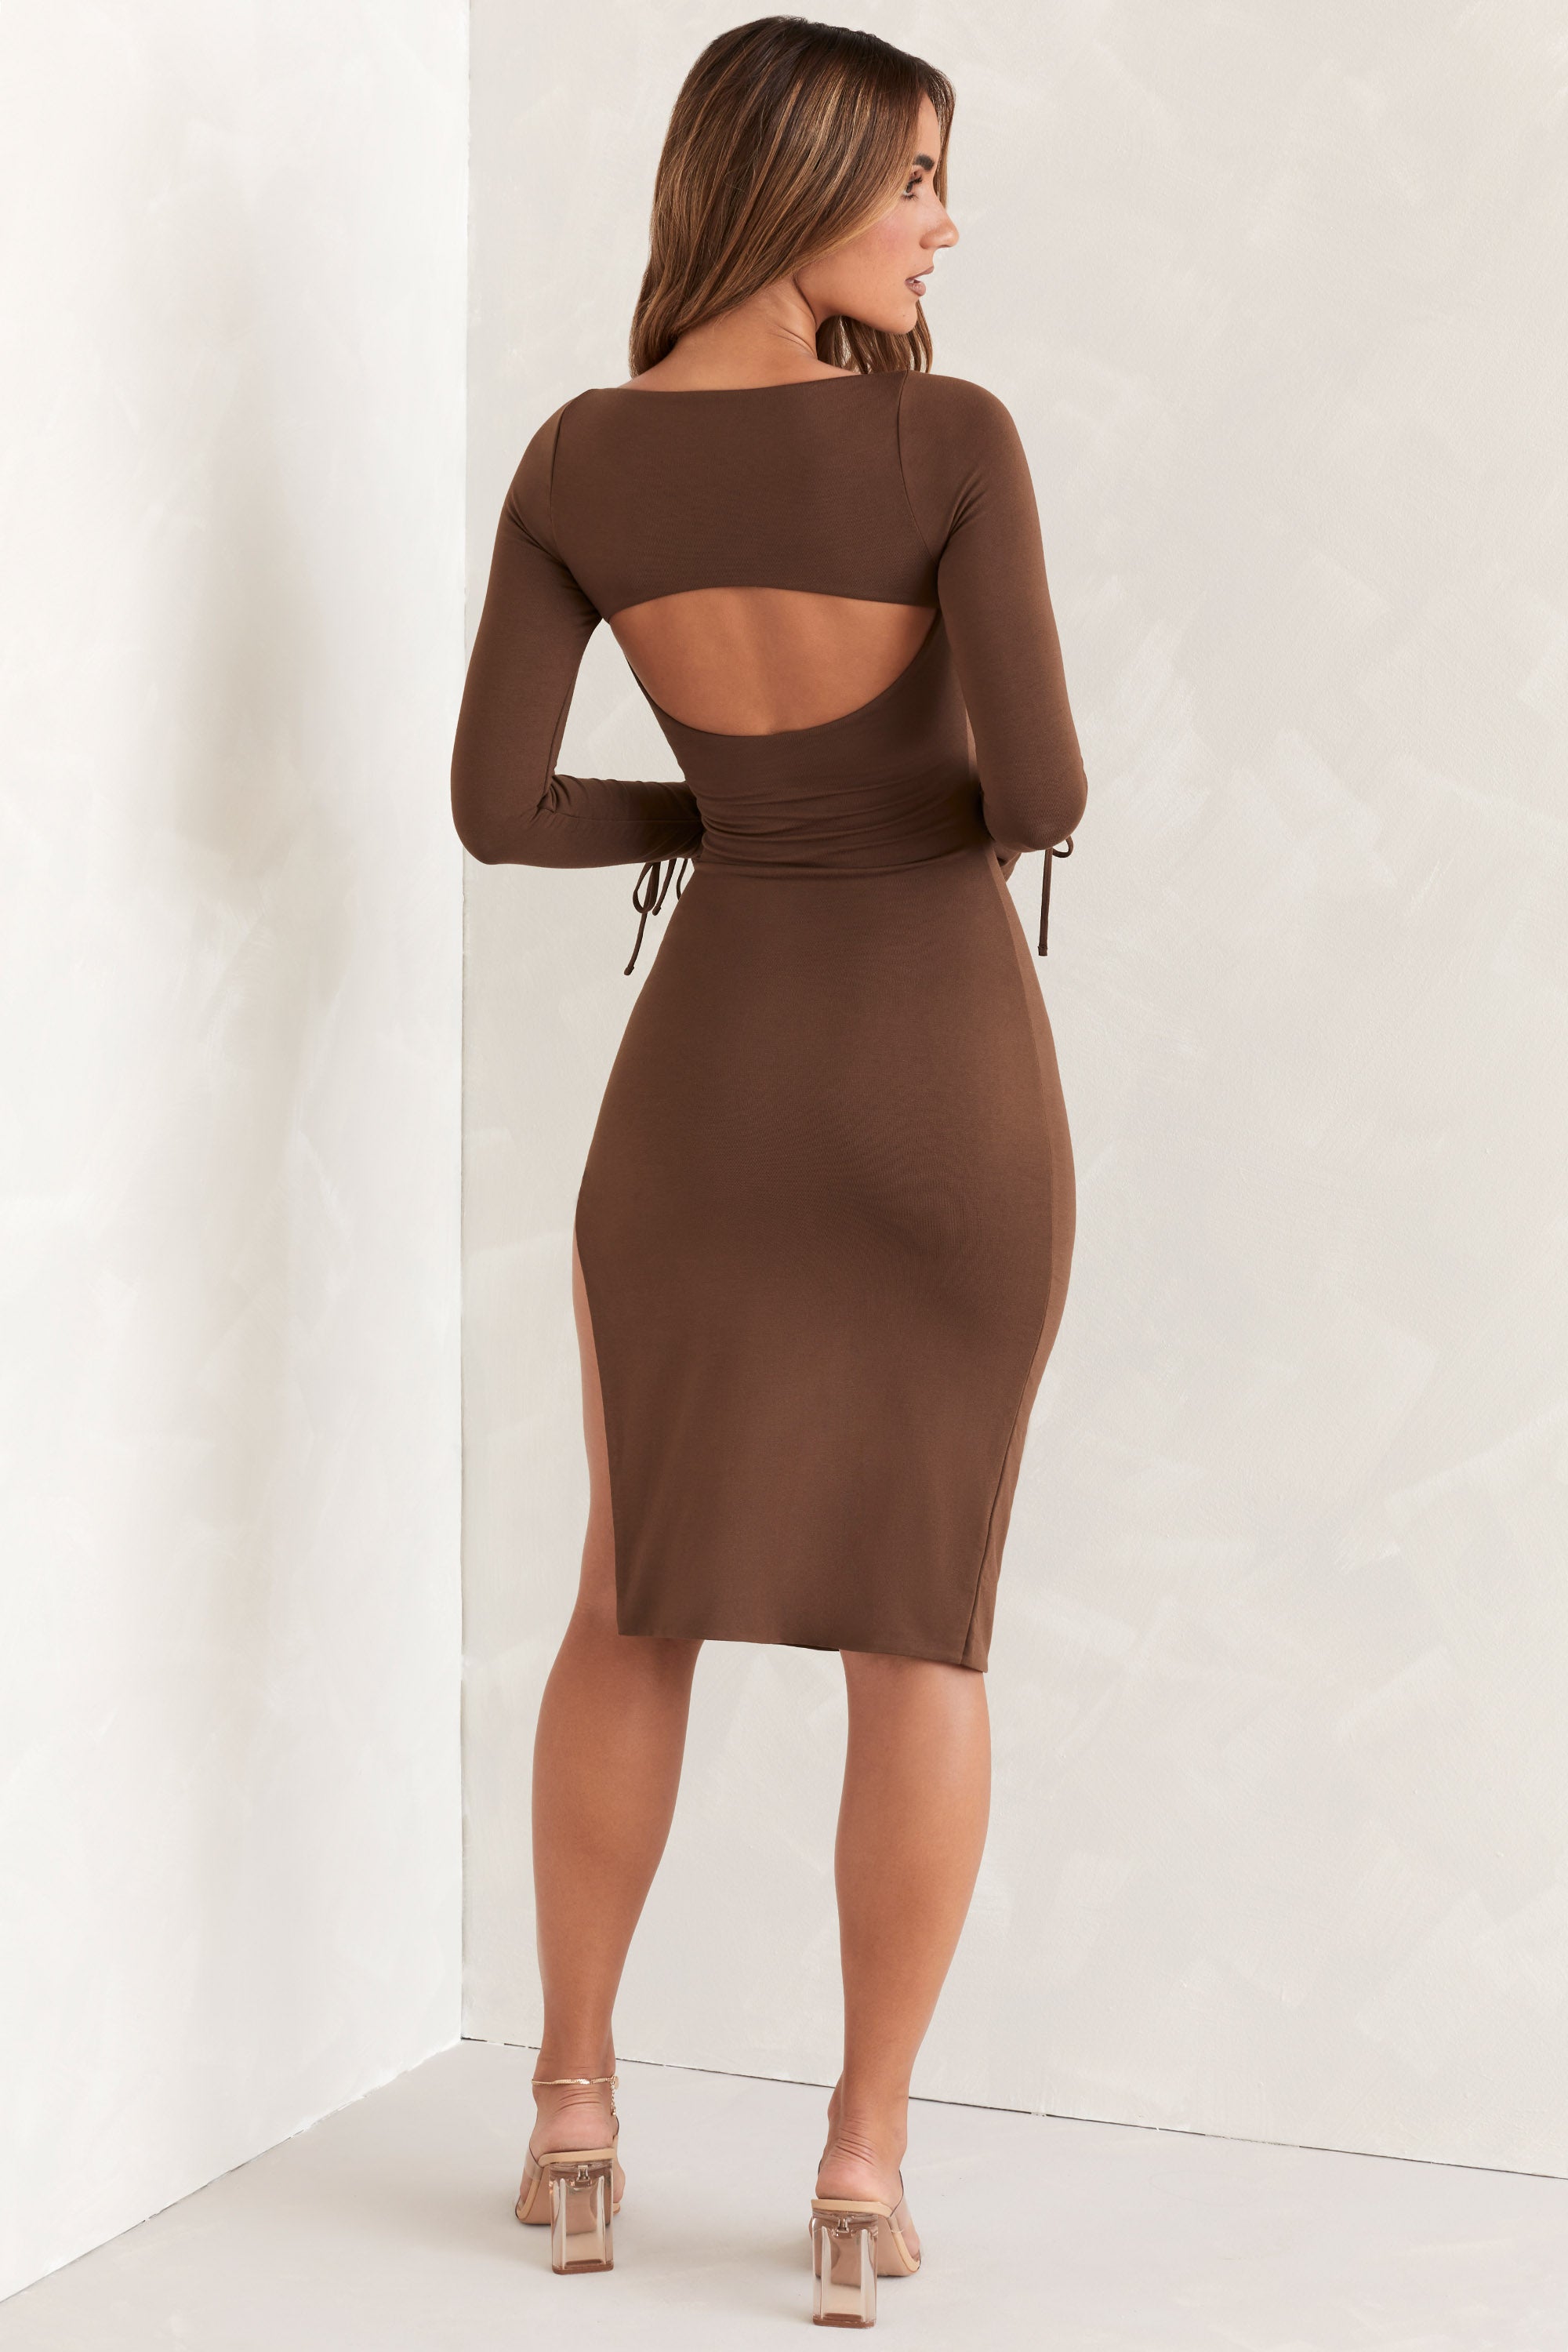 brown long dress